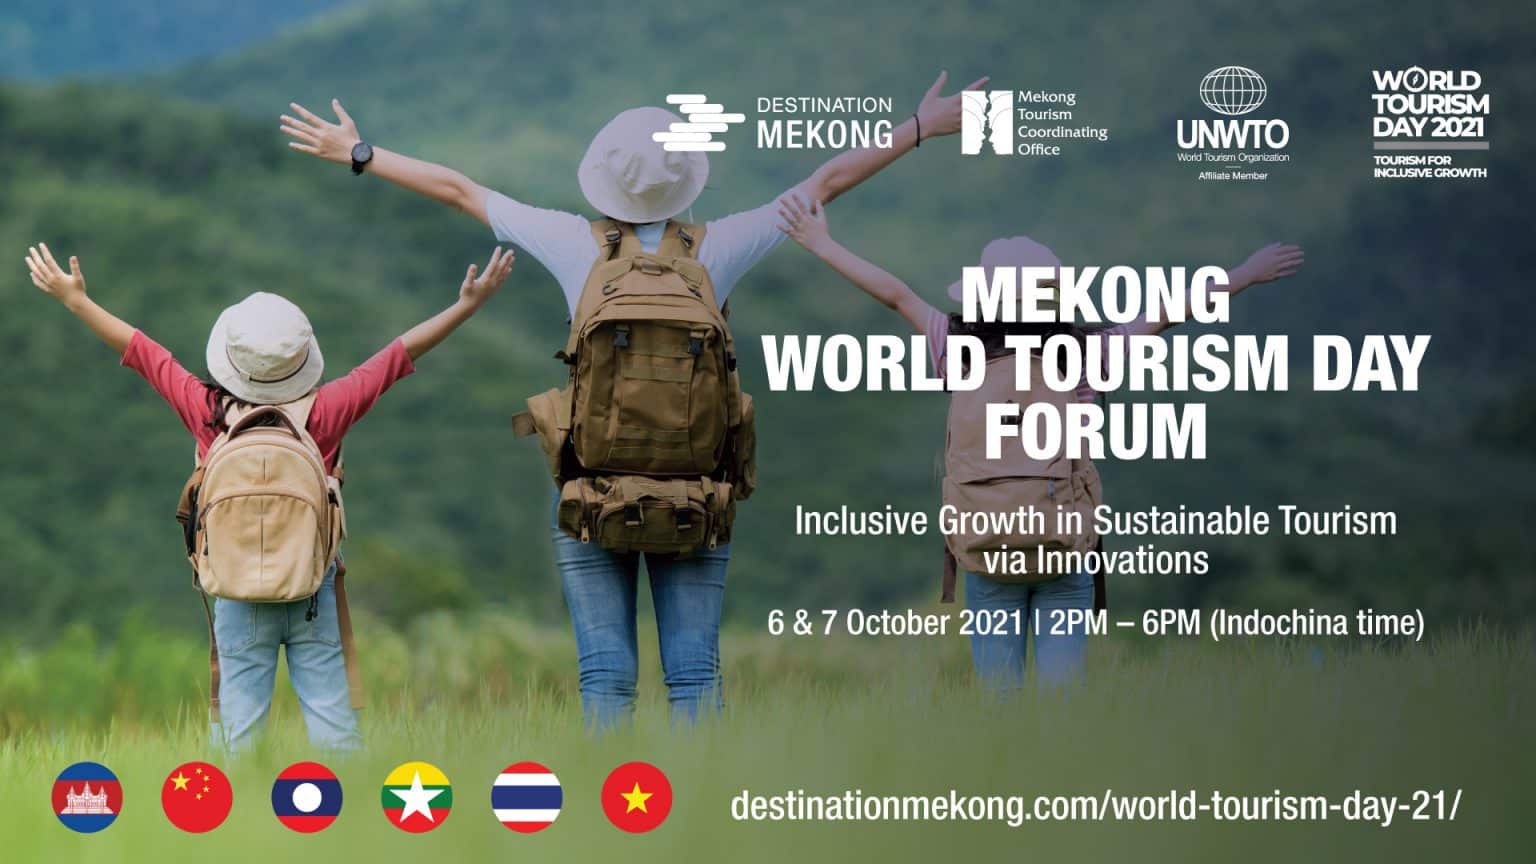 Destination Mekong Hosts 2021 Mekong World Tourism Day Forum On October 6-7